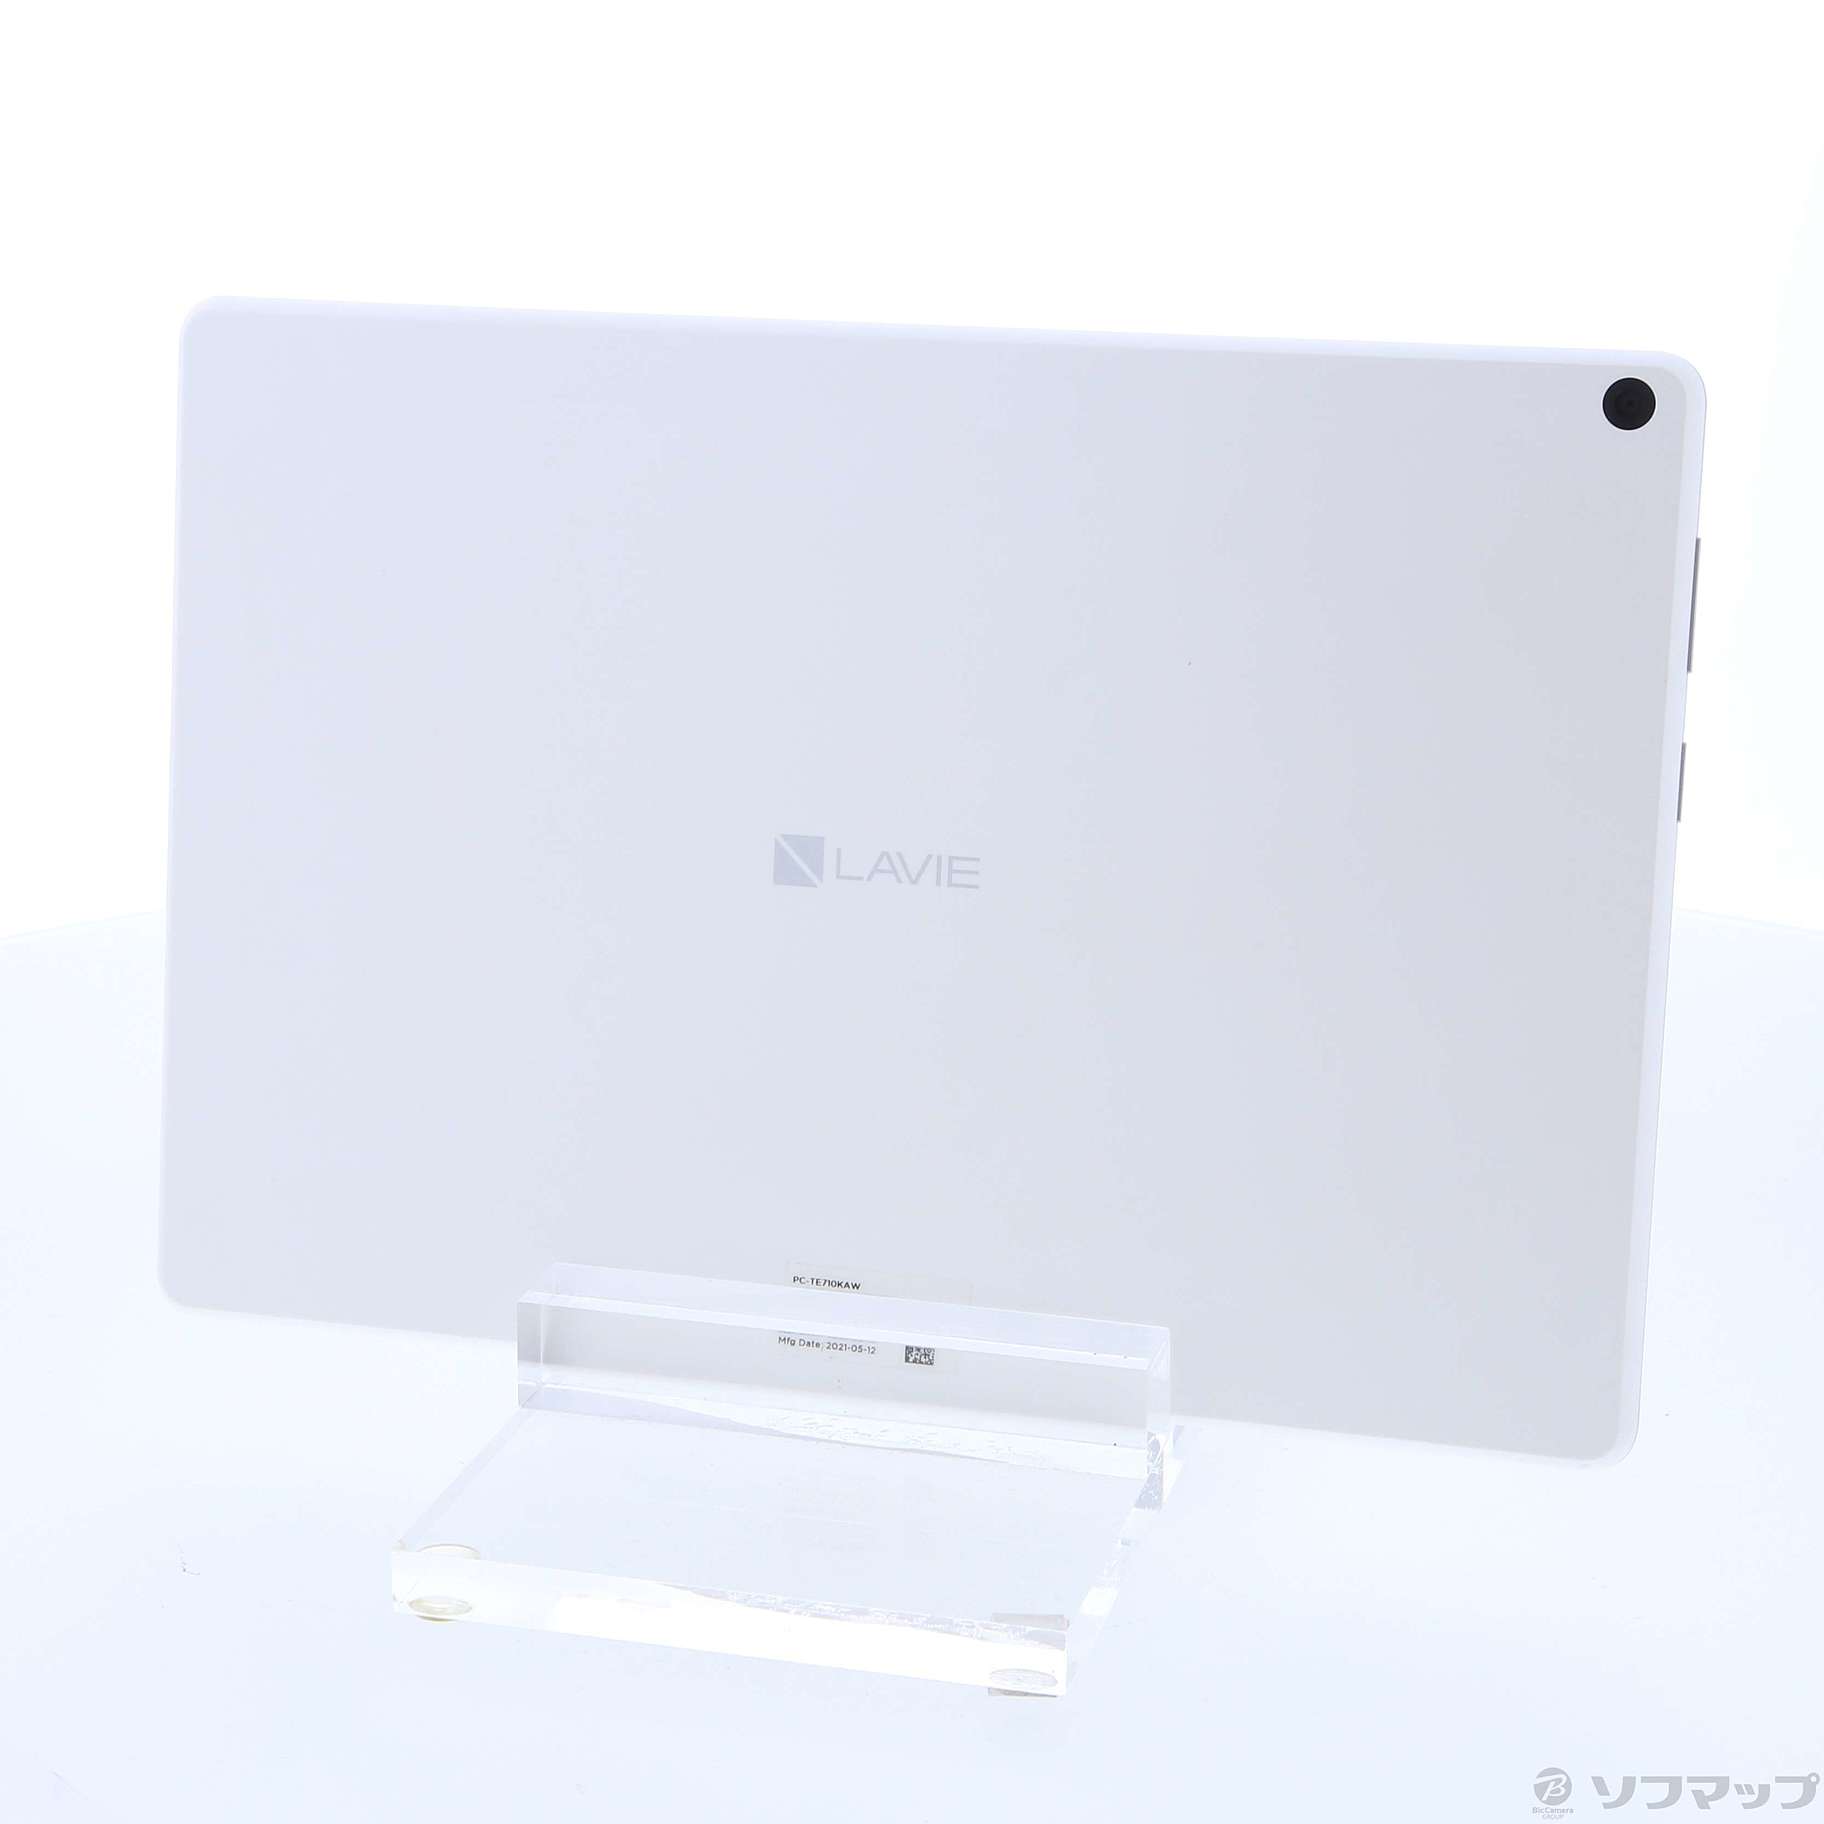 LaVie Tab E TE710／KAW 64GB ホワイト PC-TE710KAW Wi-Fi